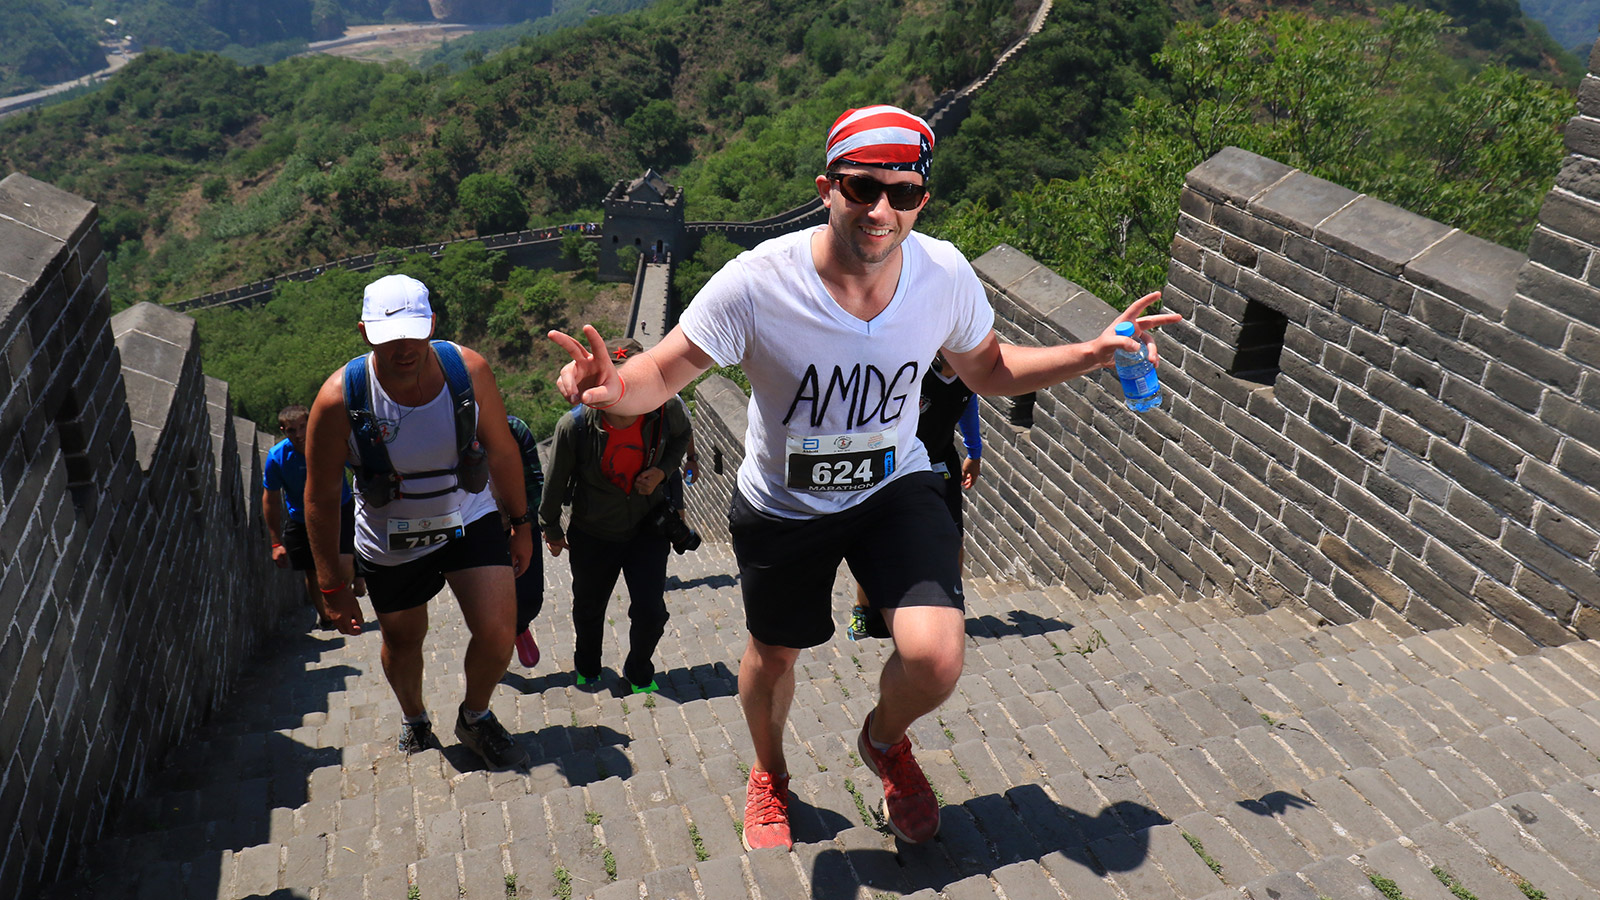 Daniel McCann, Esq. '09, an economics adjunct at Saint Joseph's Univeristy, running in the Great Wall of China.